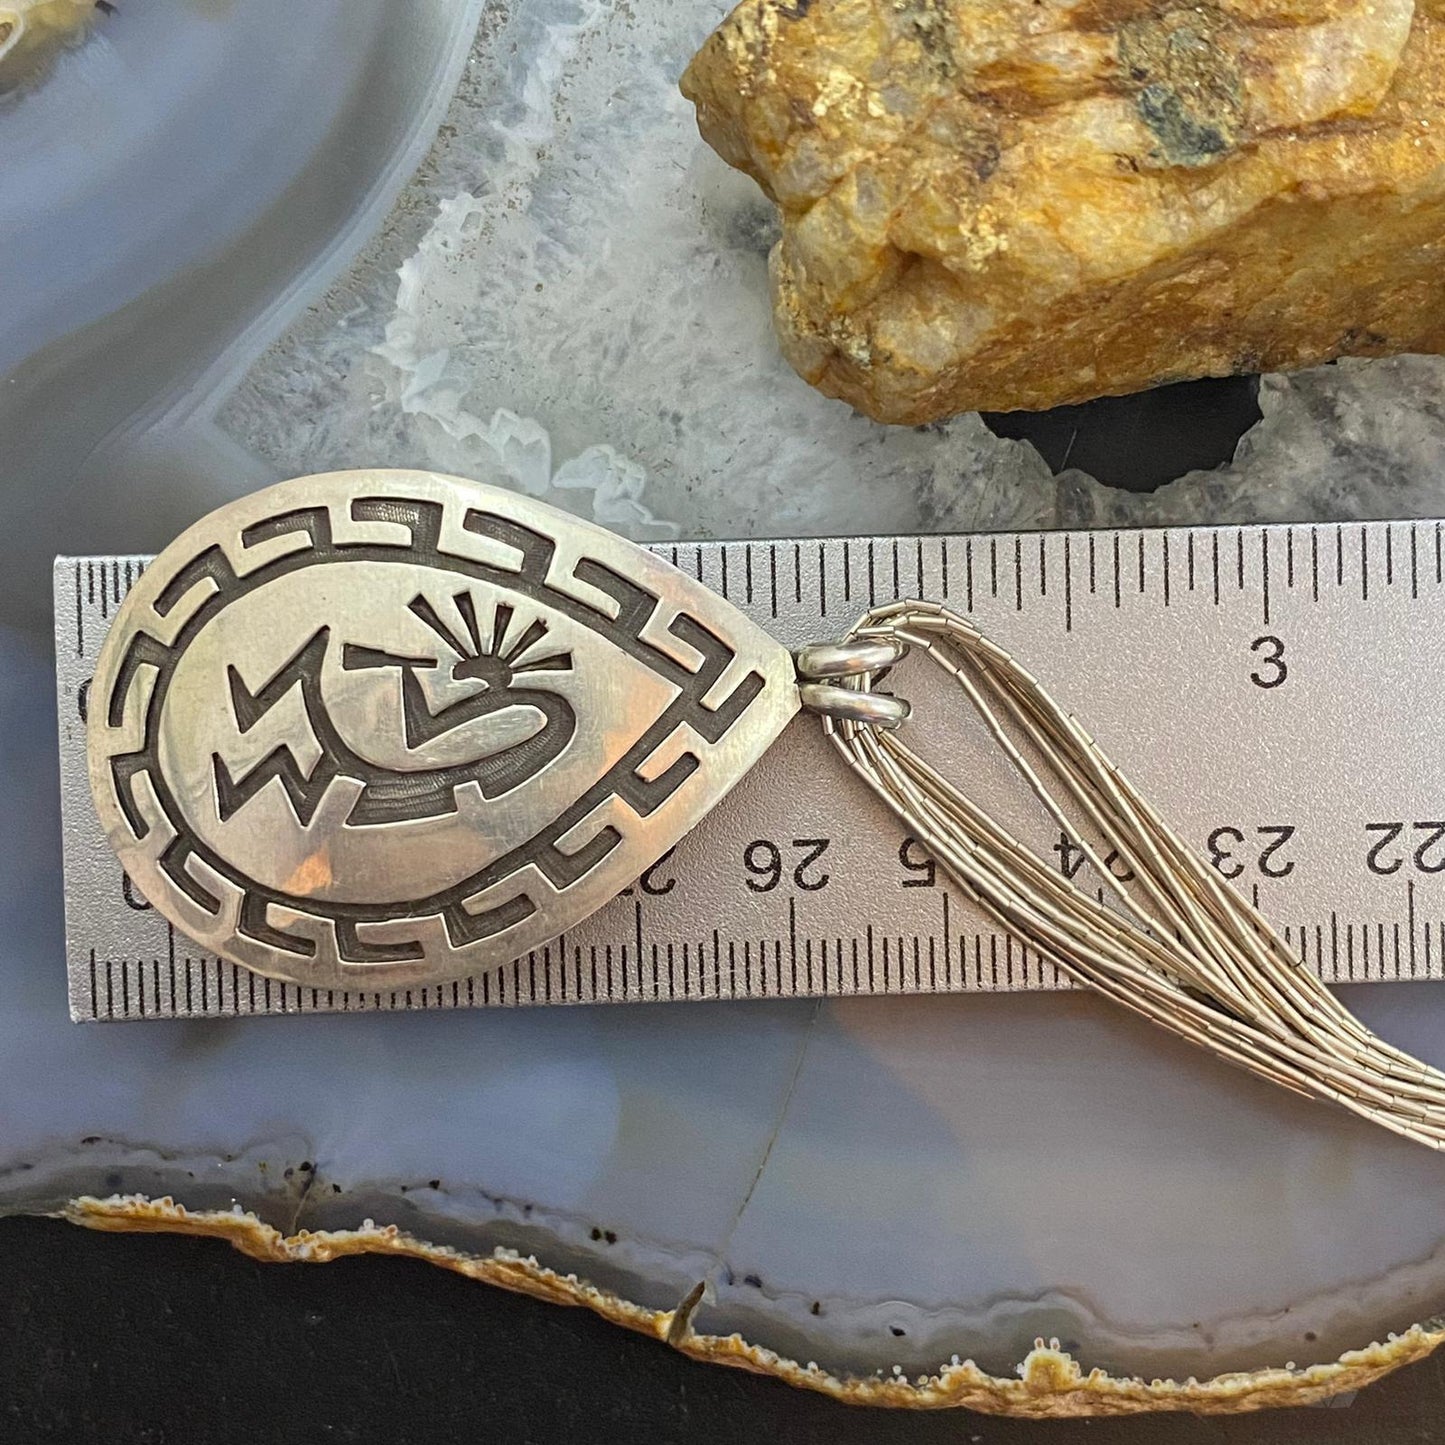 Vintage Native American Sterling Silver Hopi Kokopelli Pendant w/Liquid Silver Necklace